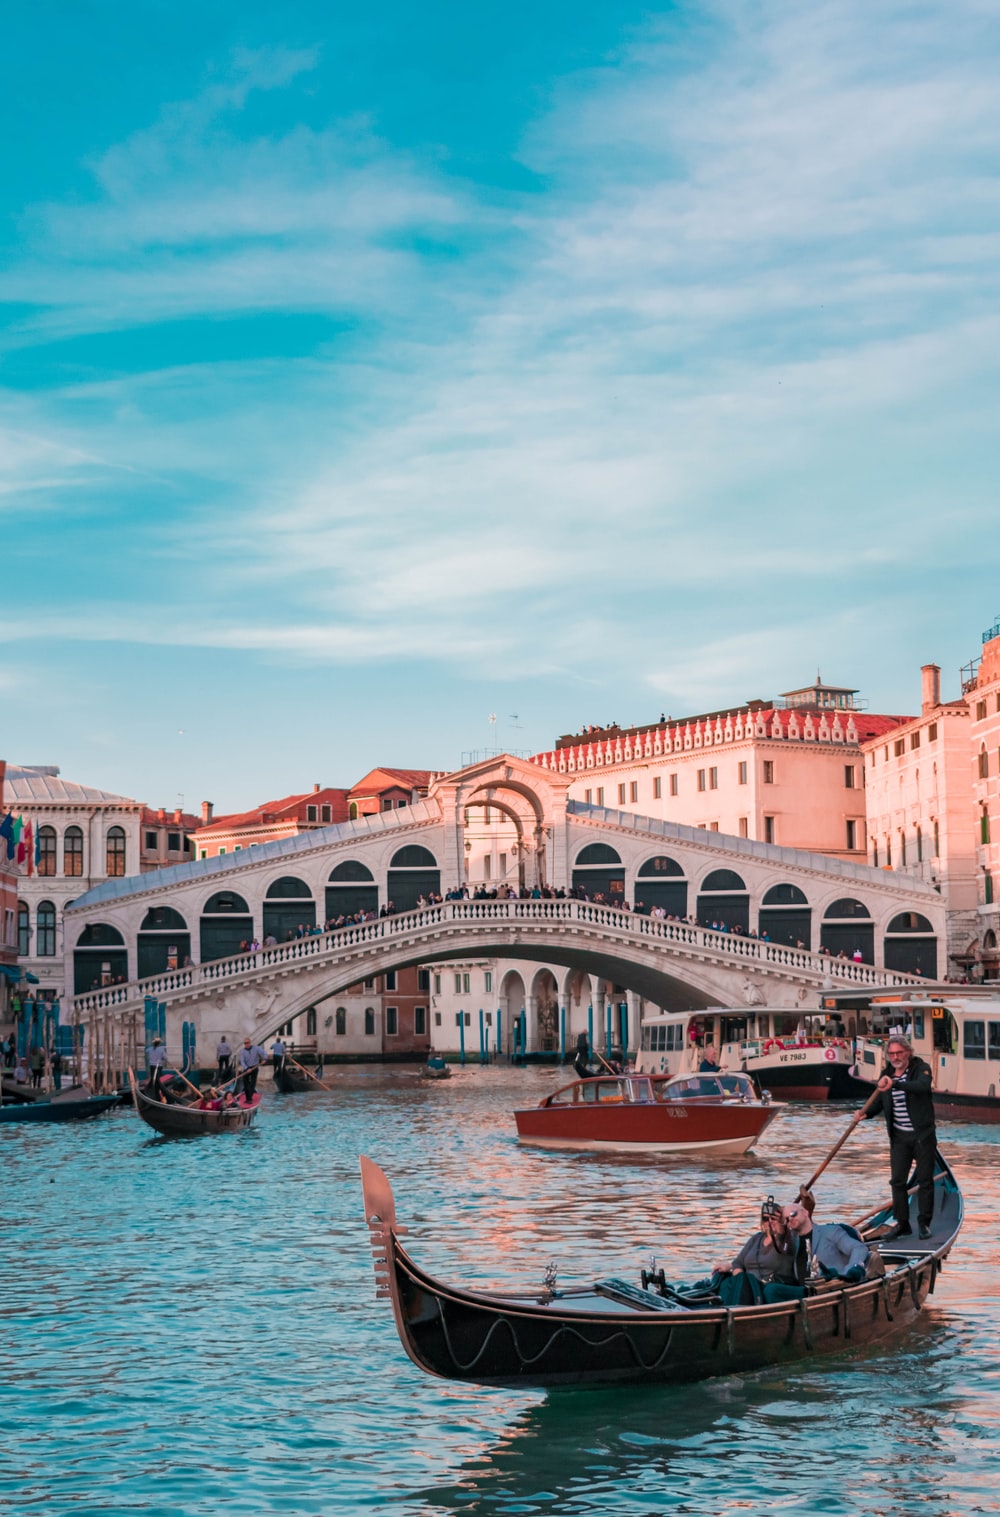 Venice Picture [Scenic Travel Photo]. Download Free Image